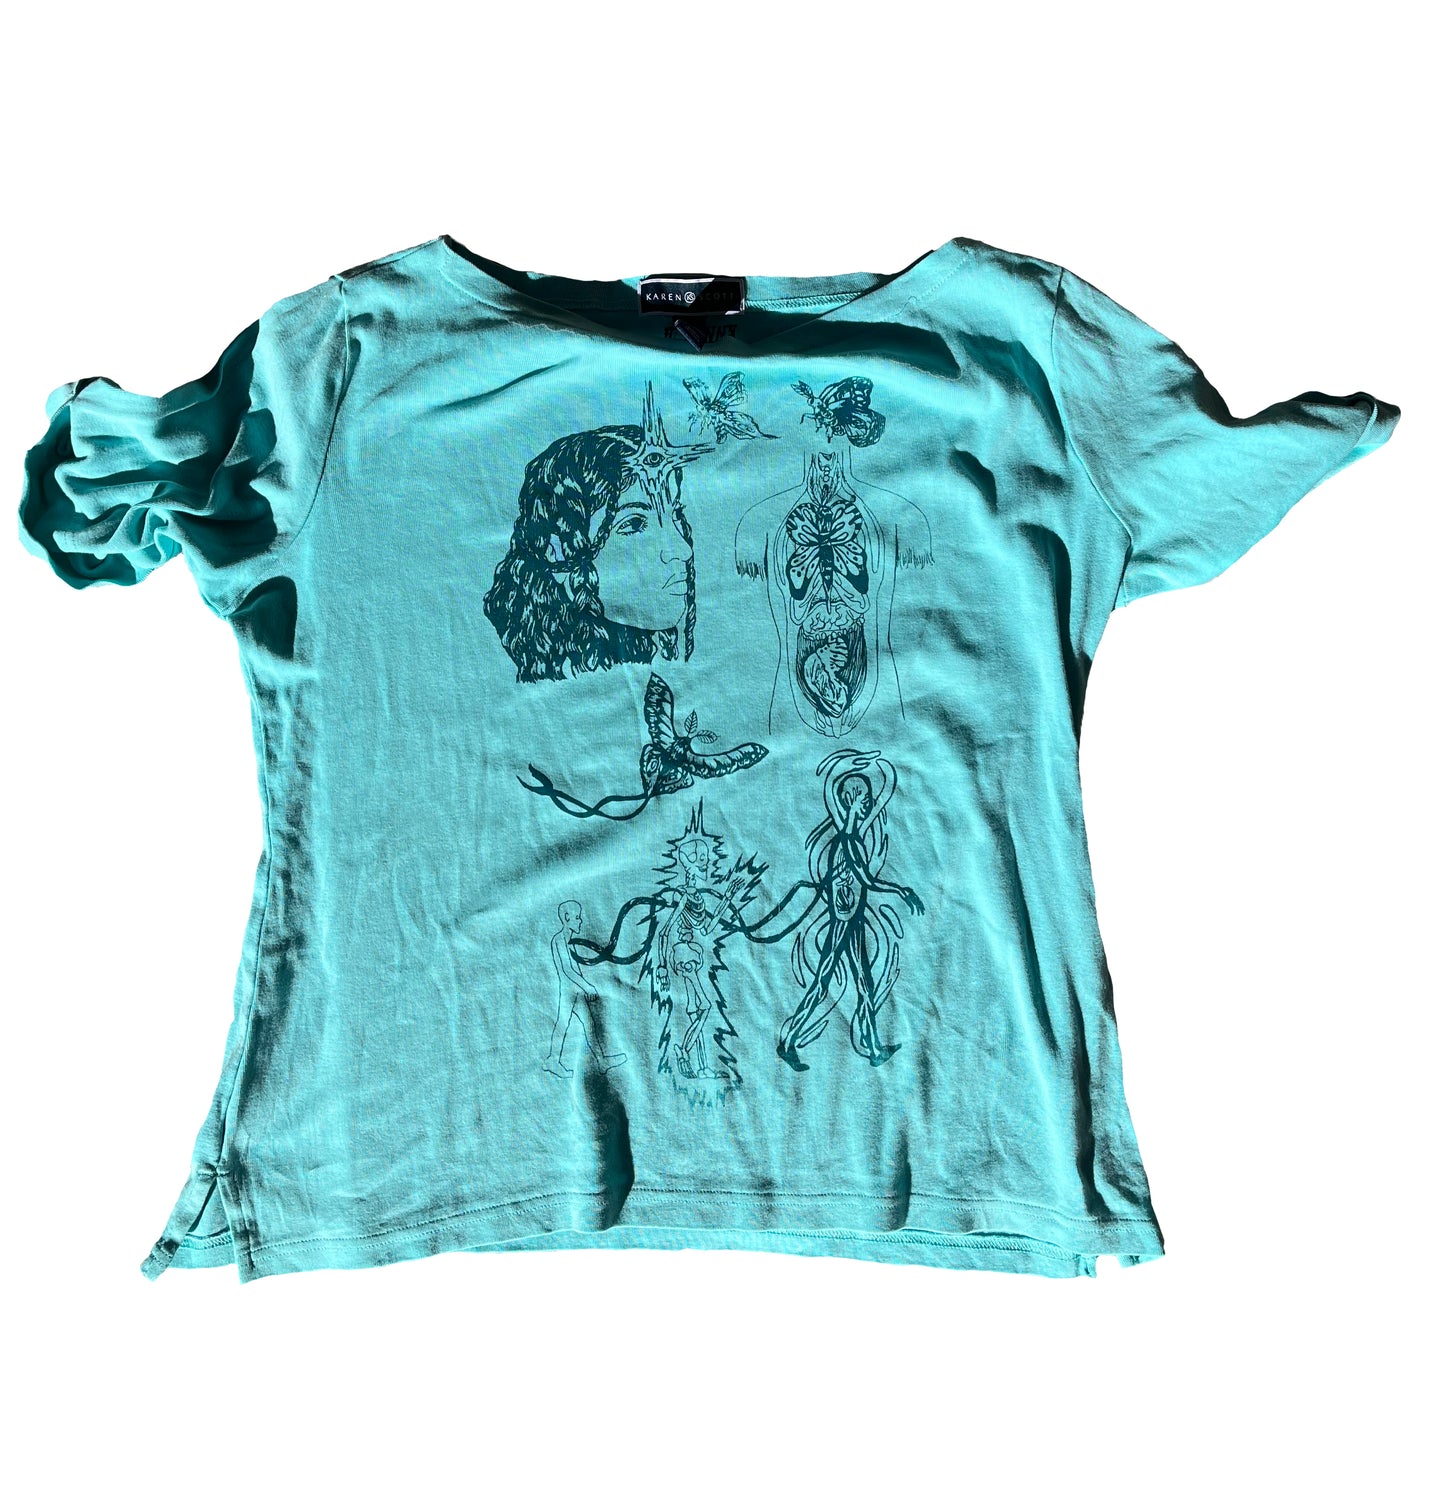 MEDIUM Journey short sleeve teal blue graphic tee shirt 05